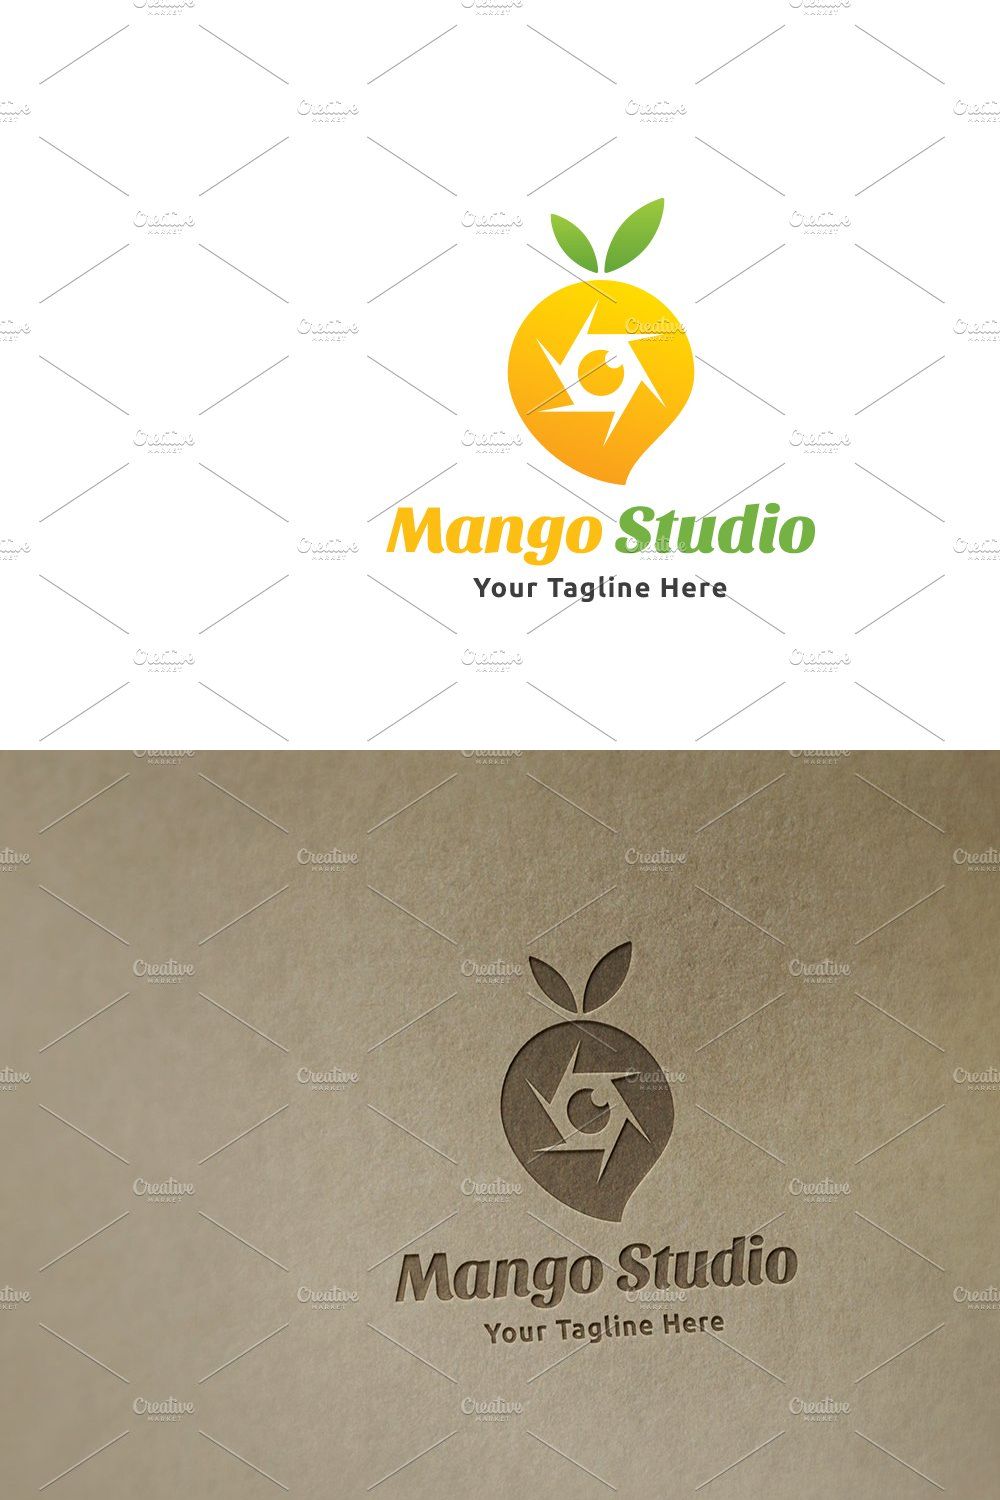 Mango Studio Logo pinterest preview image.